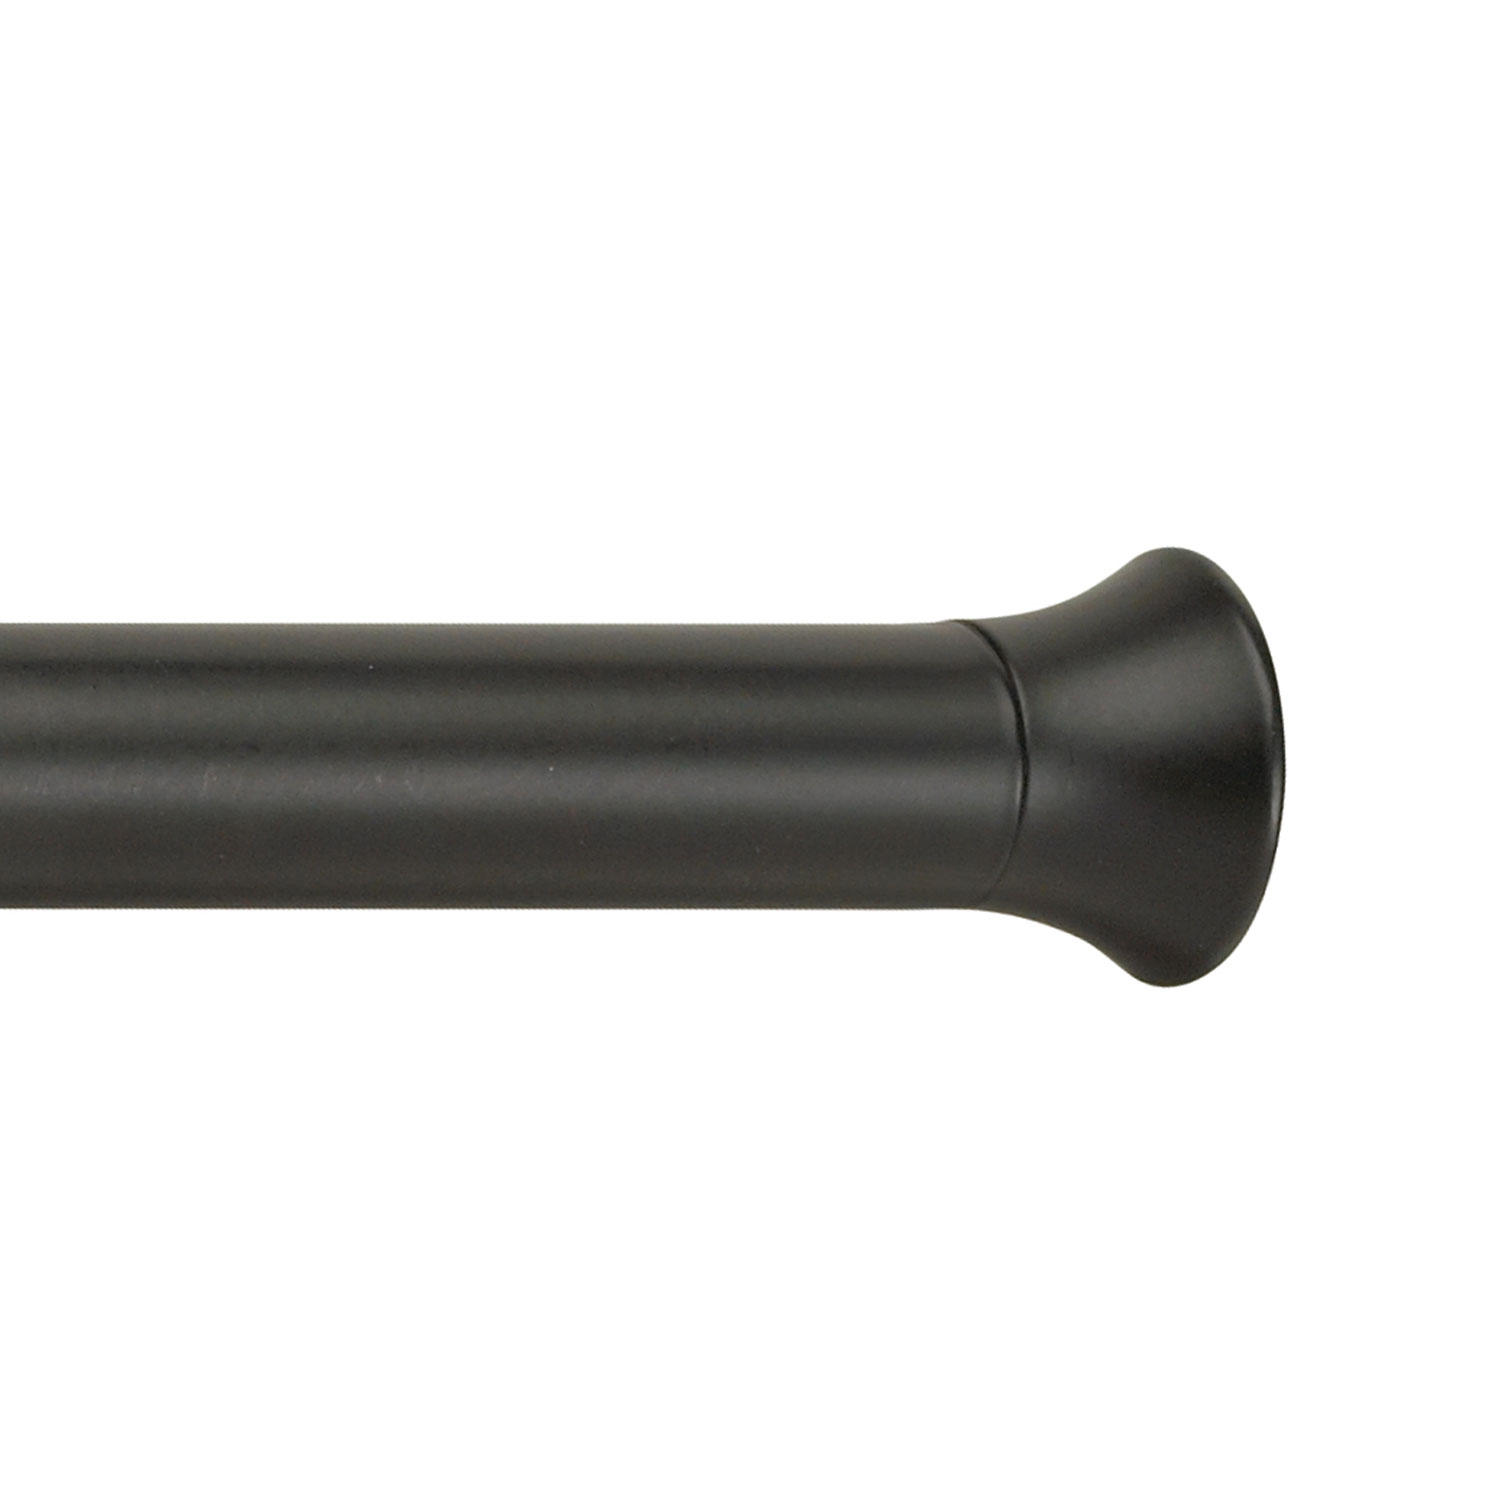 Deco Tension Rod 7/8" diameter, 36-54" length in matte black finish from Umbra